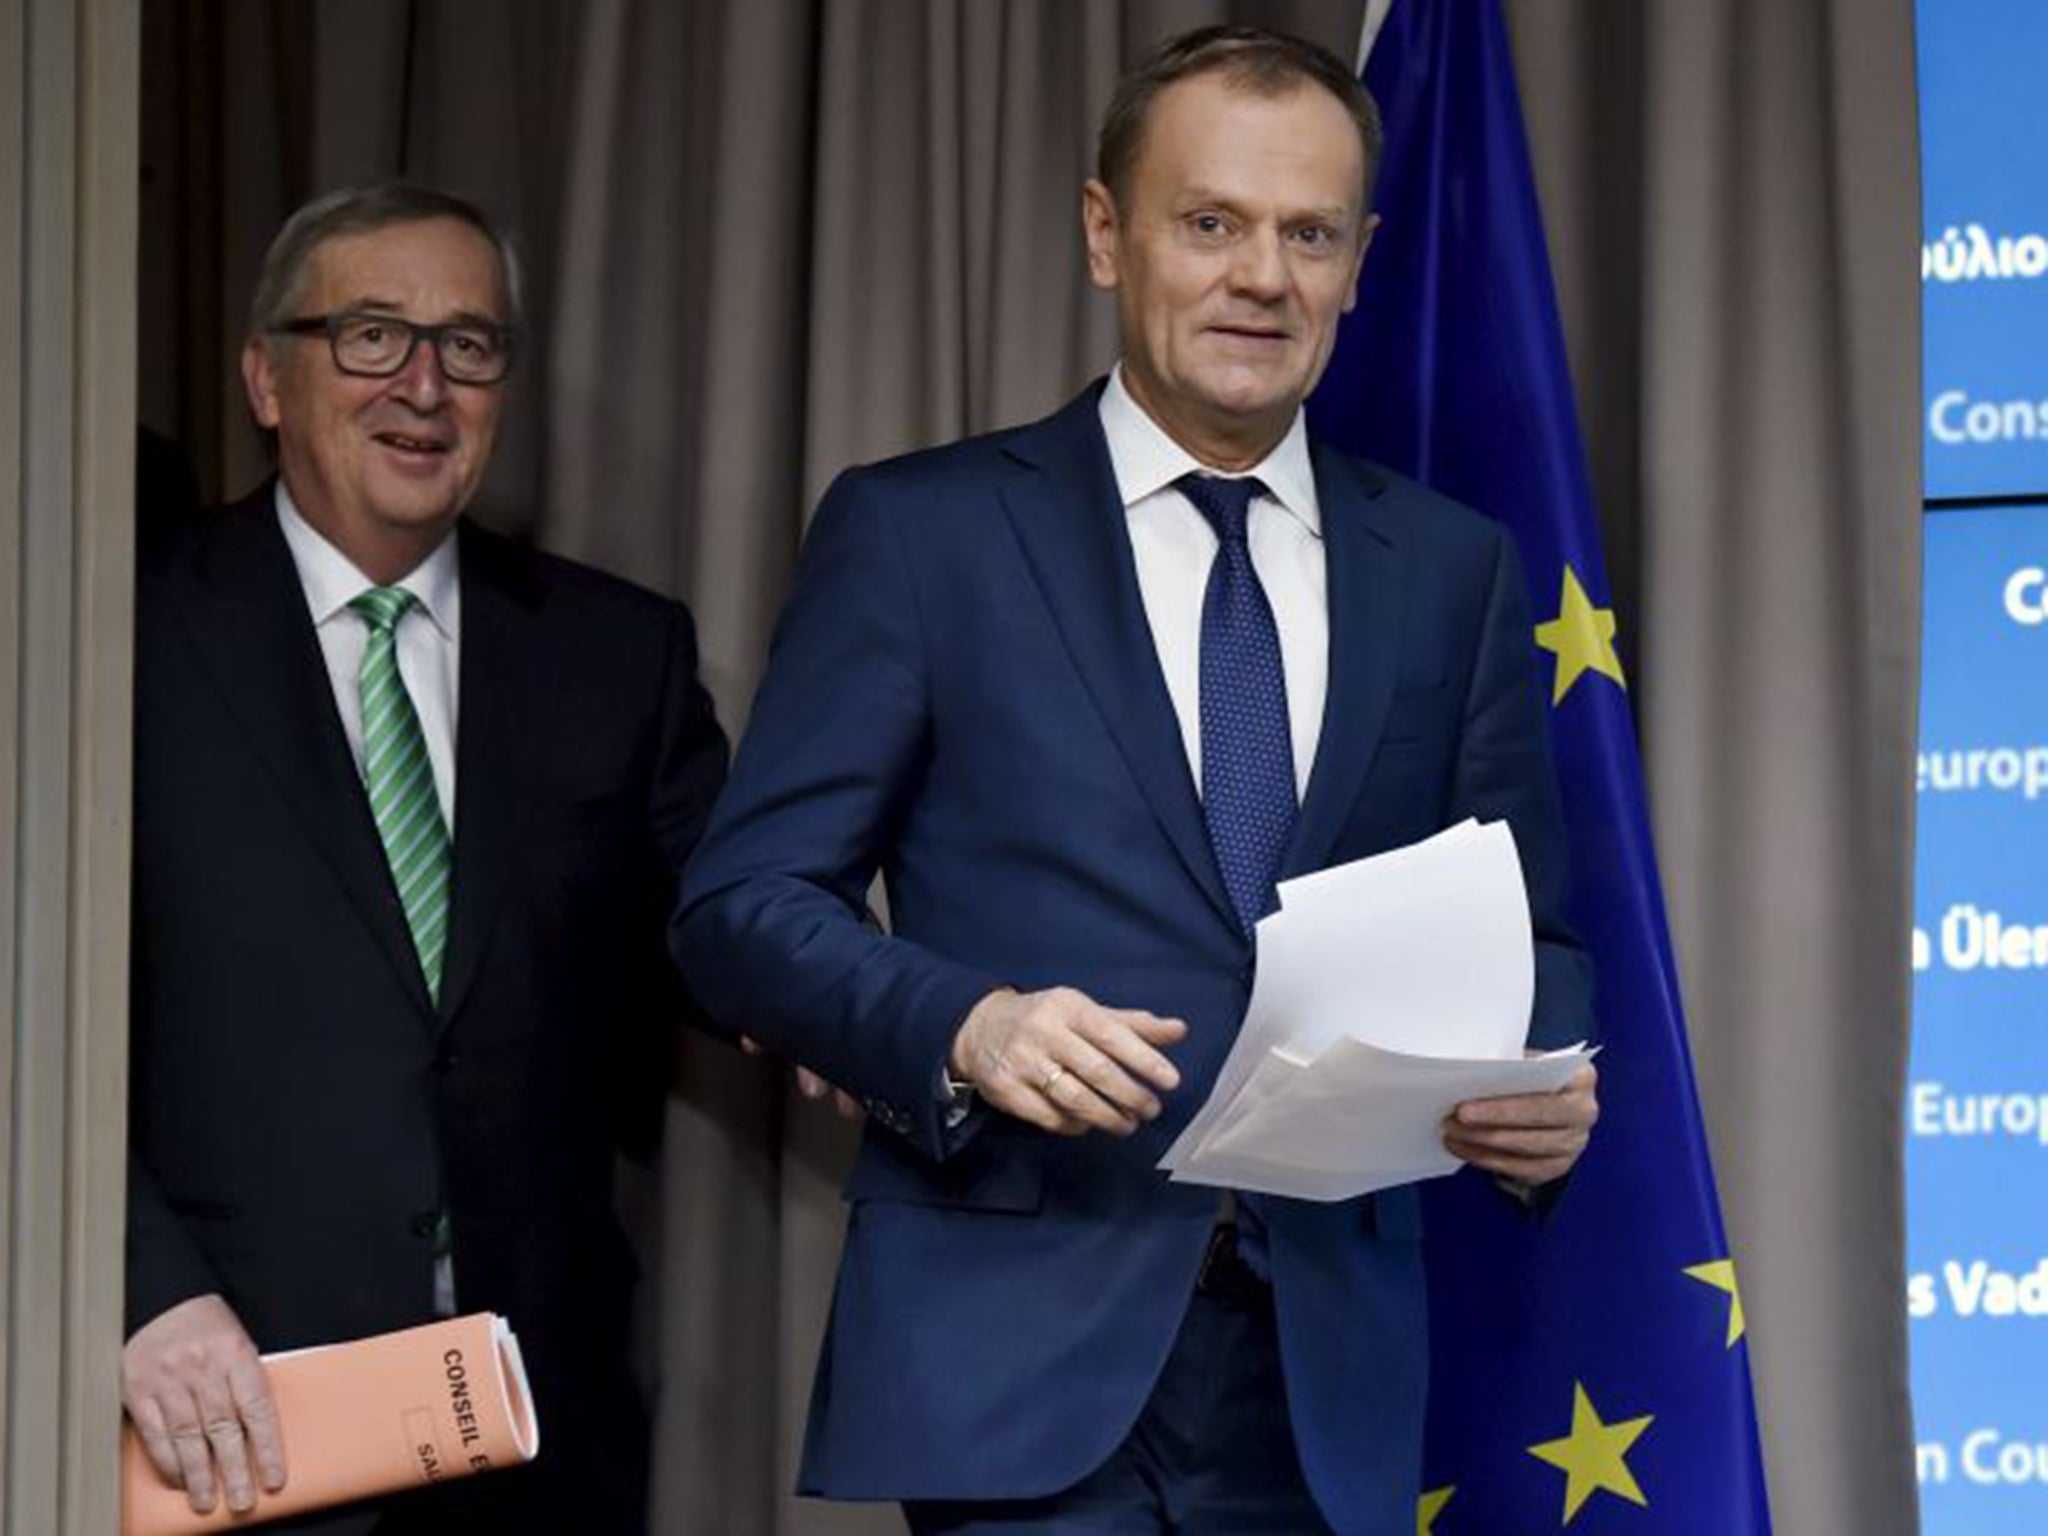 European Commission President Jean-Claude Juncker, left, and European Council President Donald Tusk